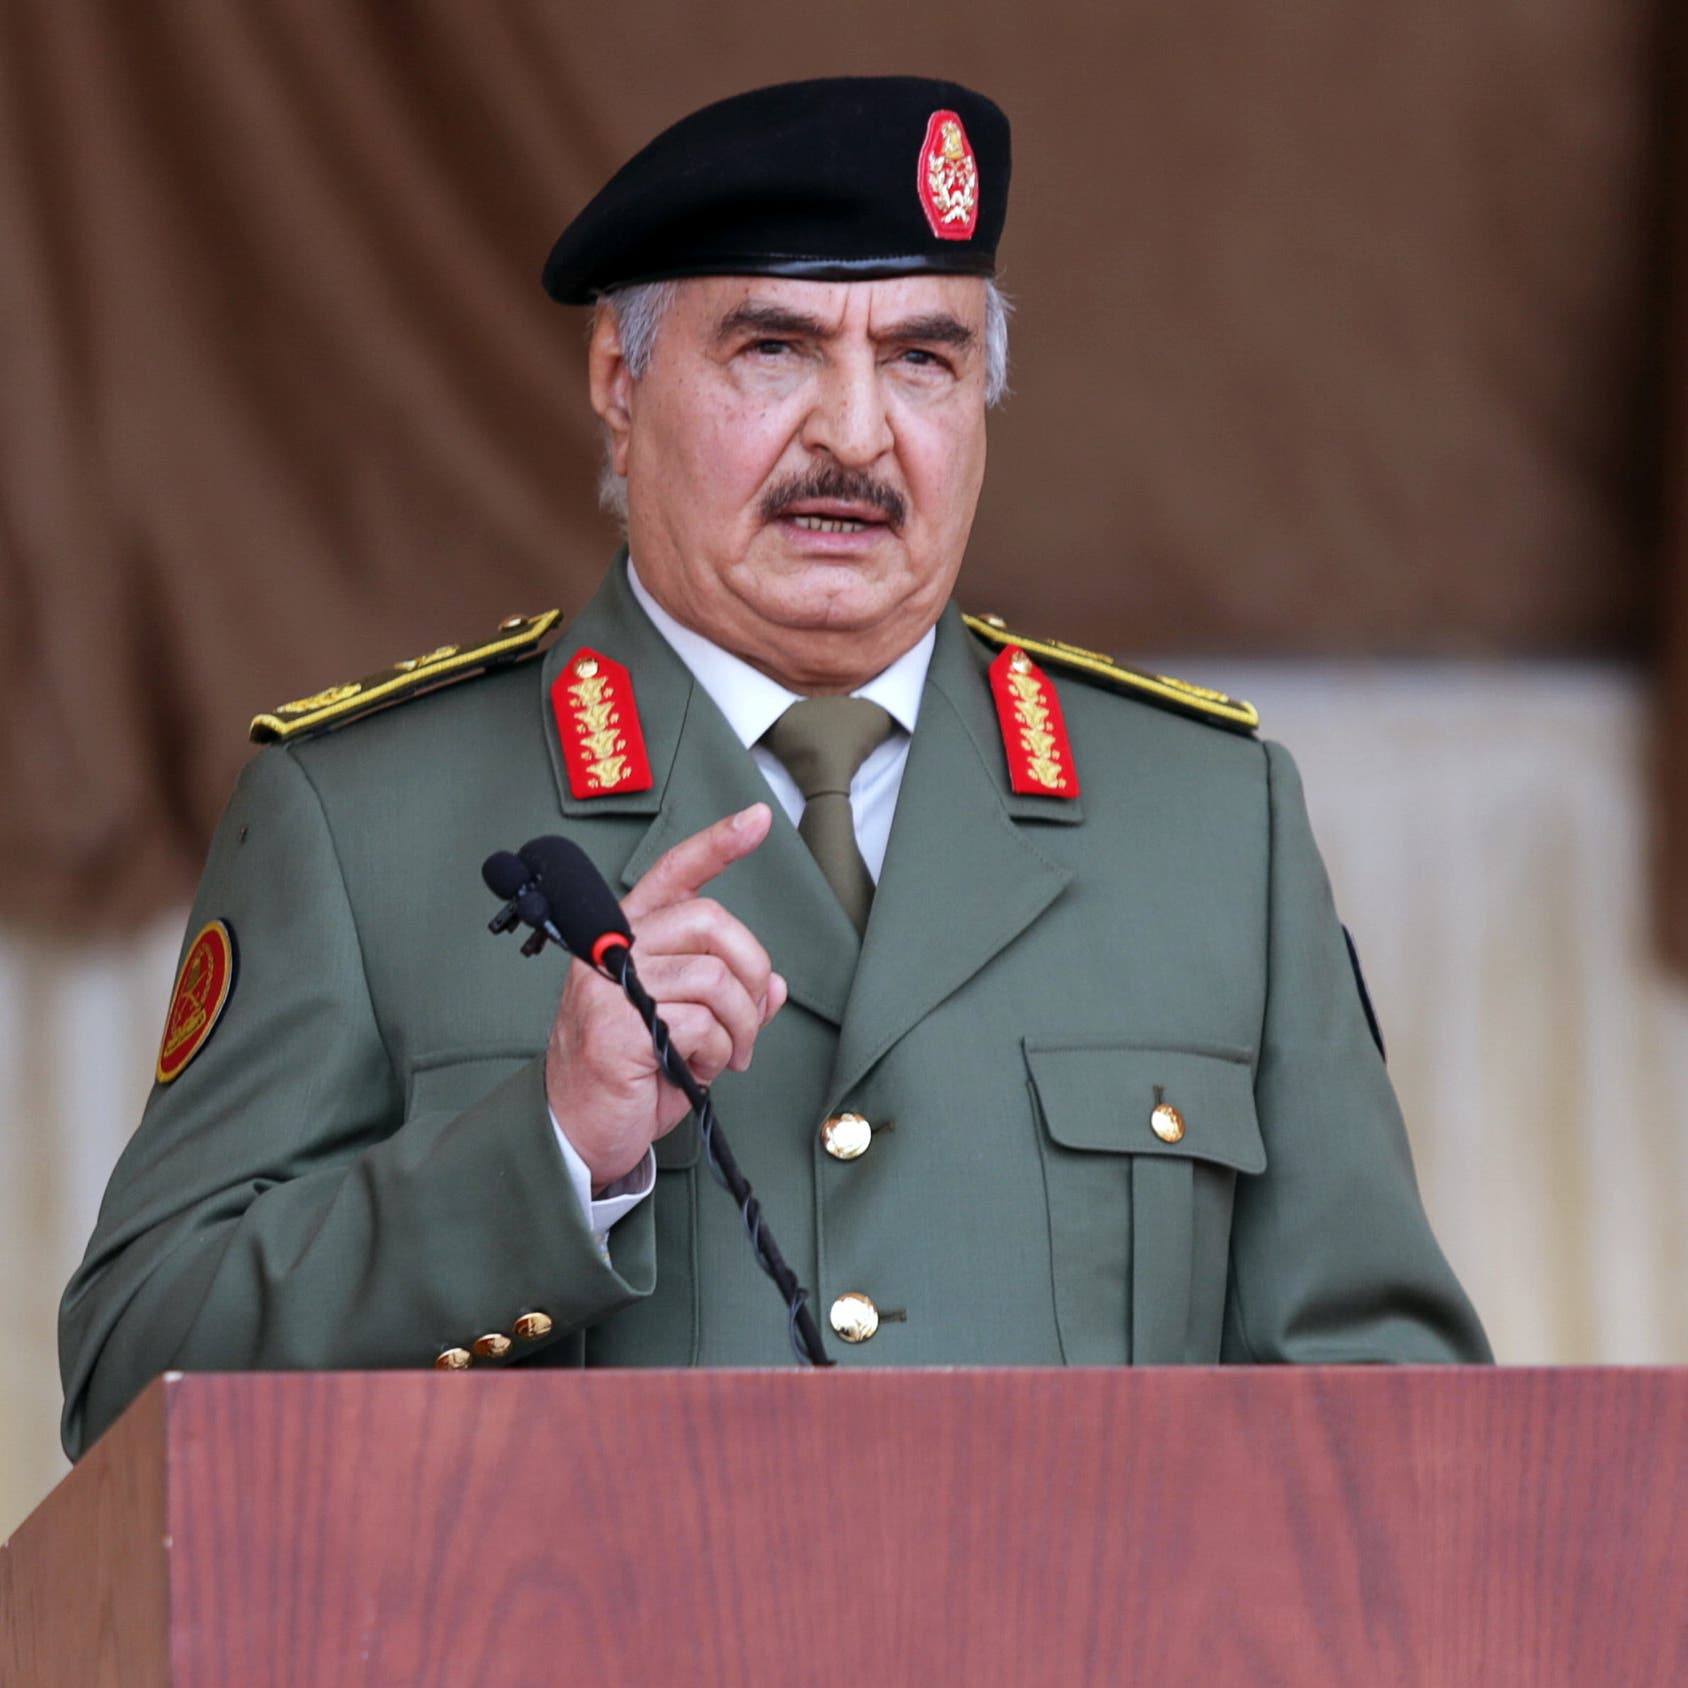 Libya’s Haftar says he is suspending military role, activities ahead of polls